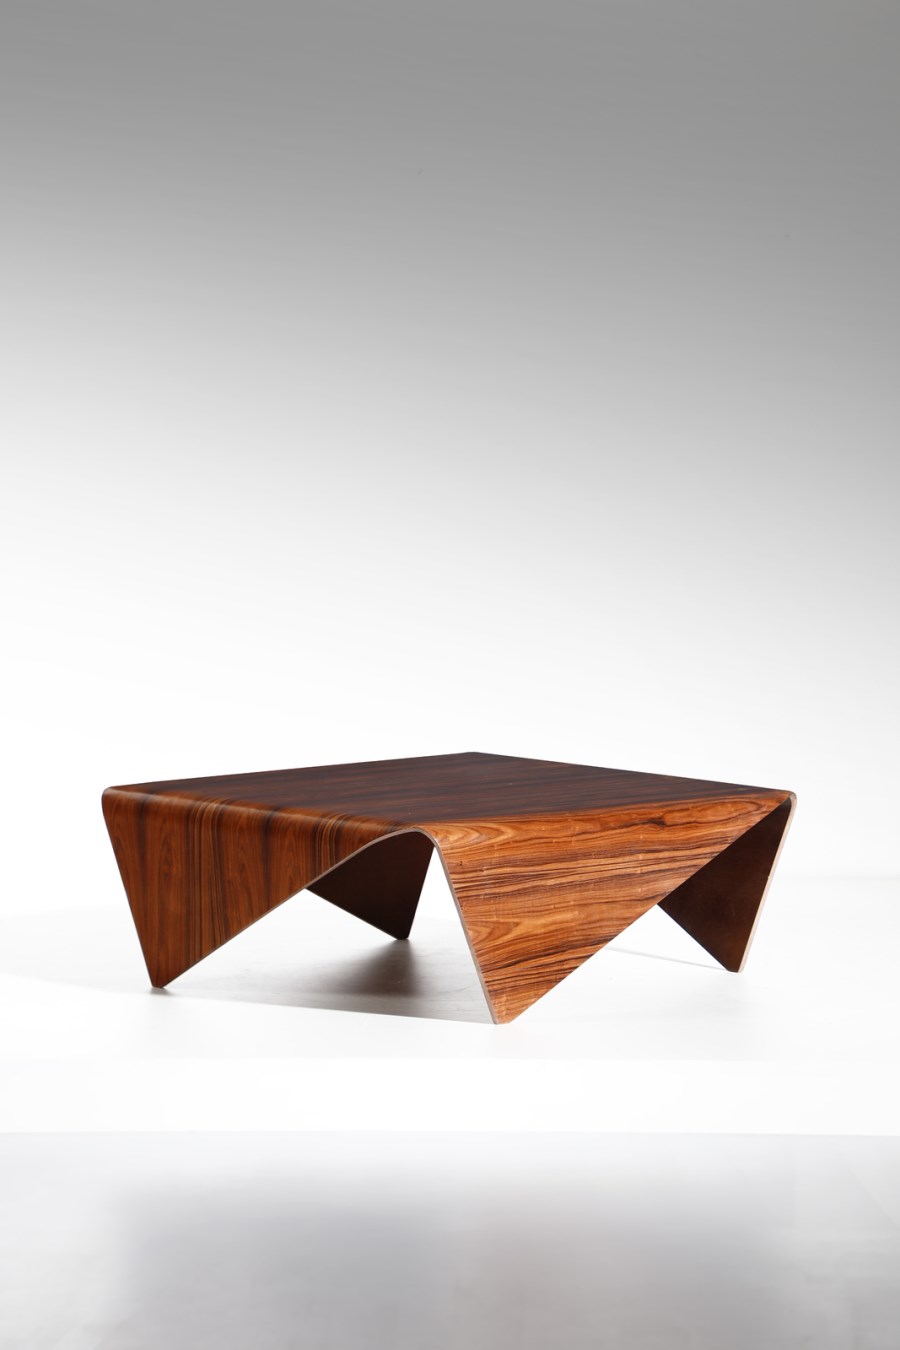 Andorinha coffee table (Jorge Zalszupin )